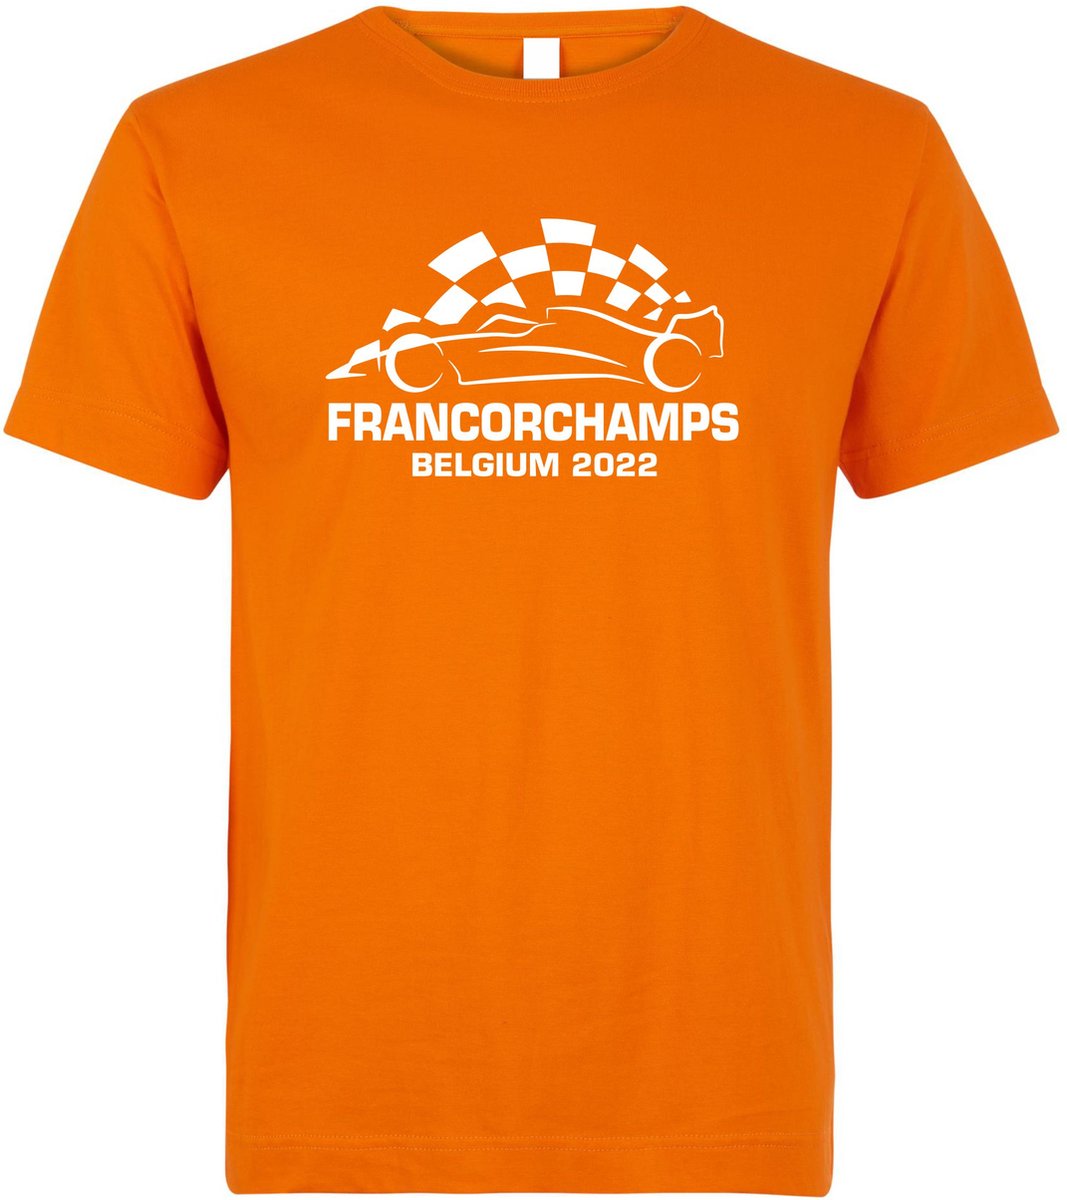 T-shirt Francorchamps Belgium 2022 met raceauto | Max Verstappen / Red Bull Racing / Formule 1 fan | Grand Prix Circuit Spa-Francorchamps | kleding shirt | Oranje | maat XS